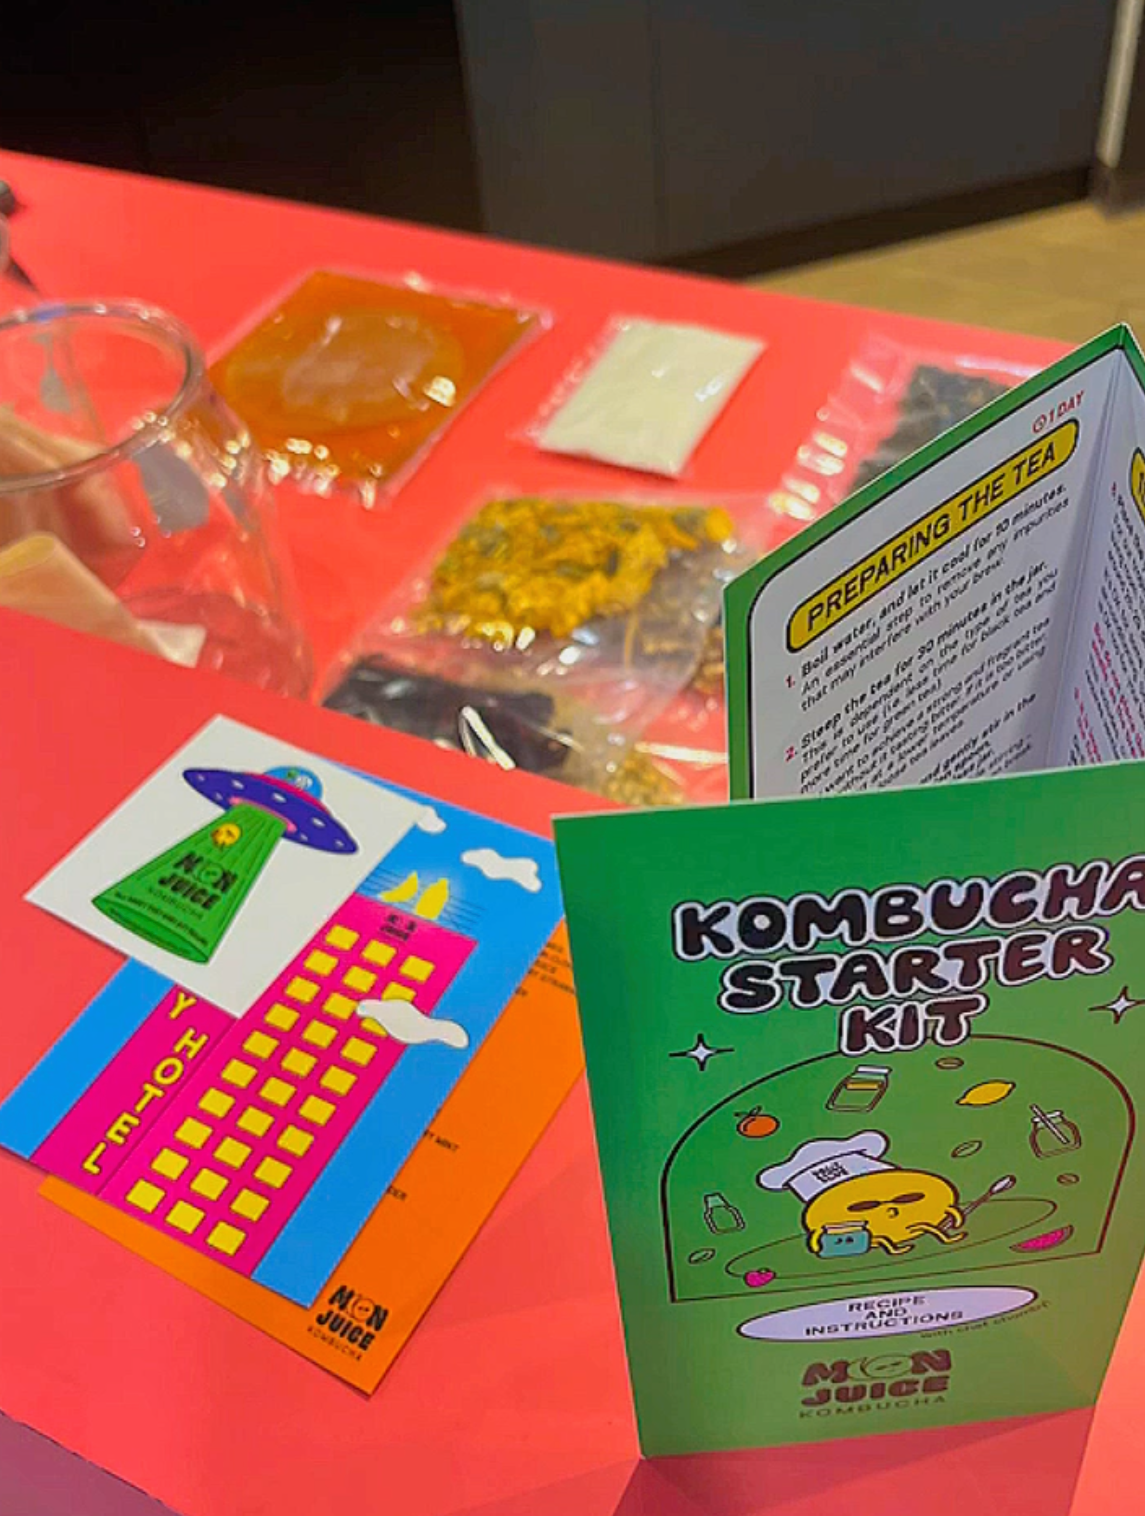 ♡ DIY Kombucha Starter Kit + Kombucha Class - Moon Juice Kombucha